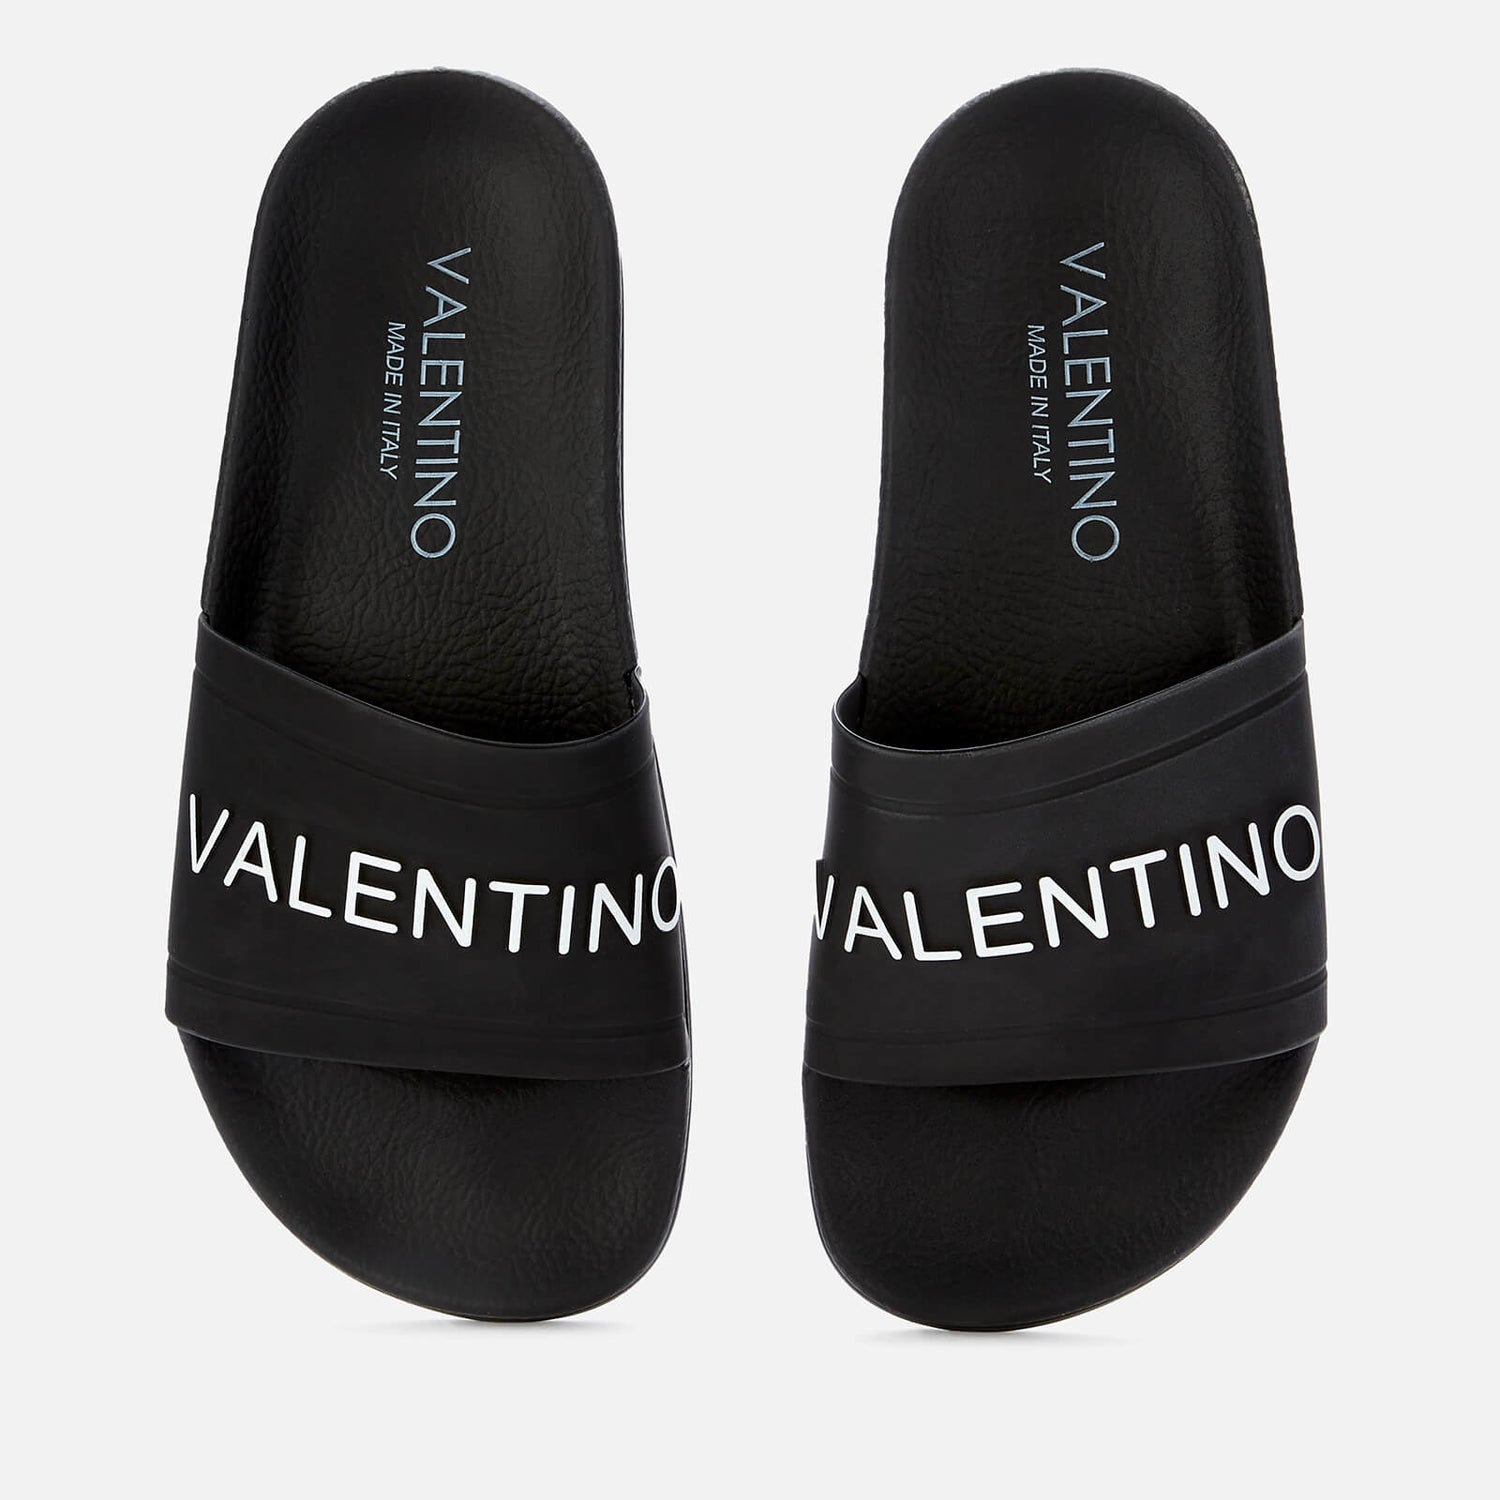 Valentino Shoes Women's Slide Sandals - Black